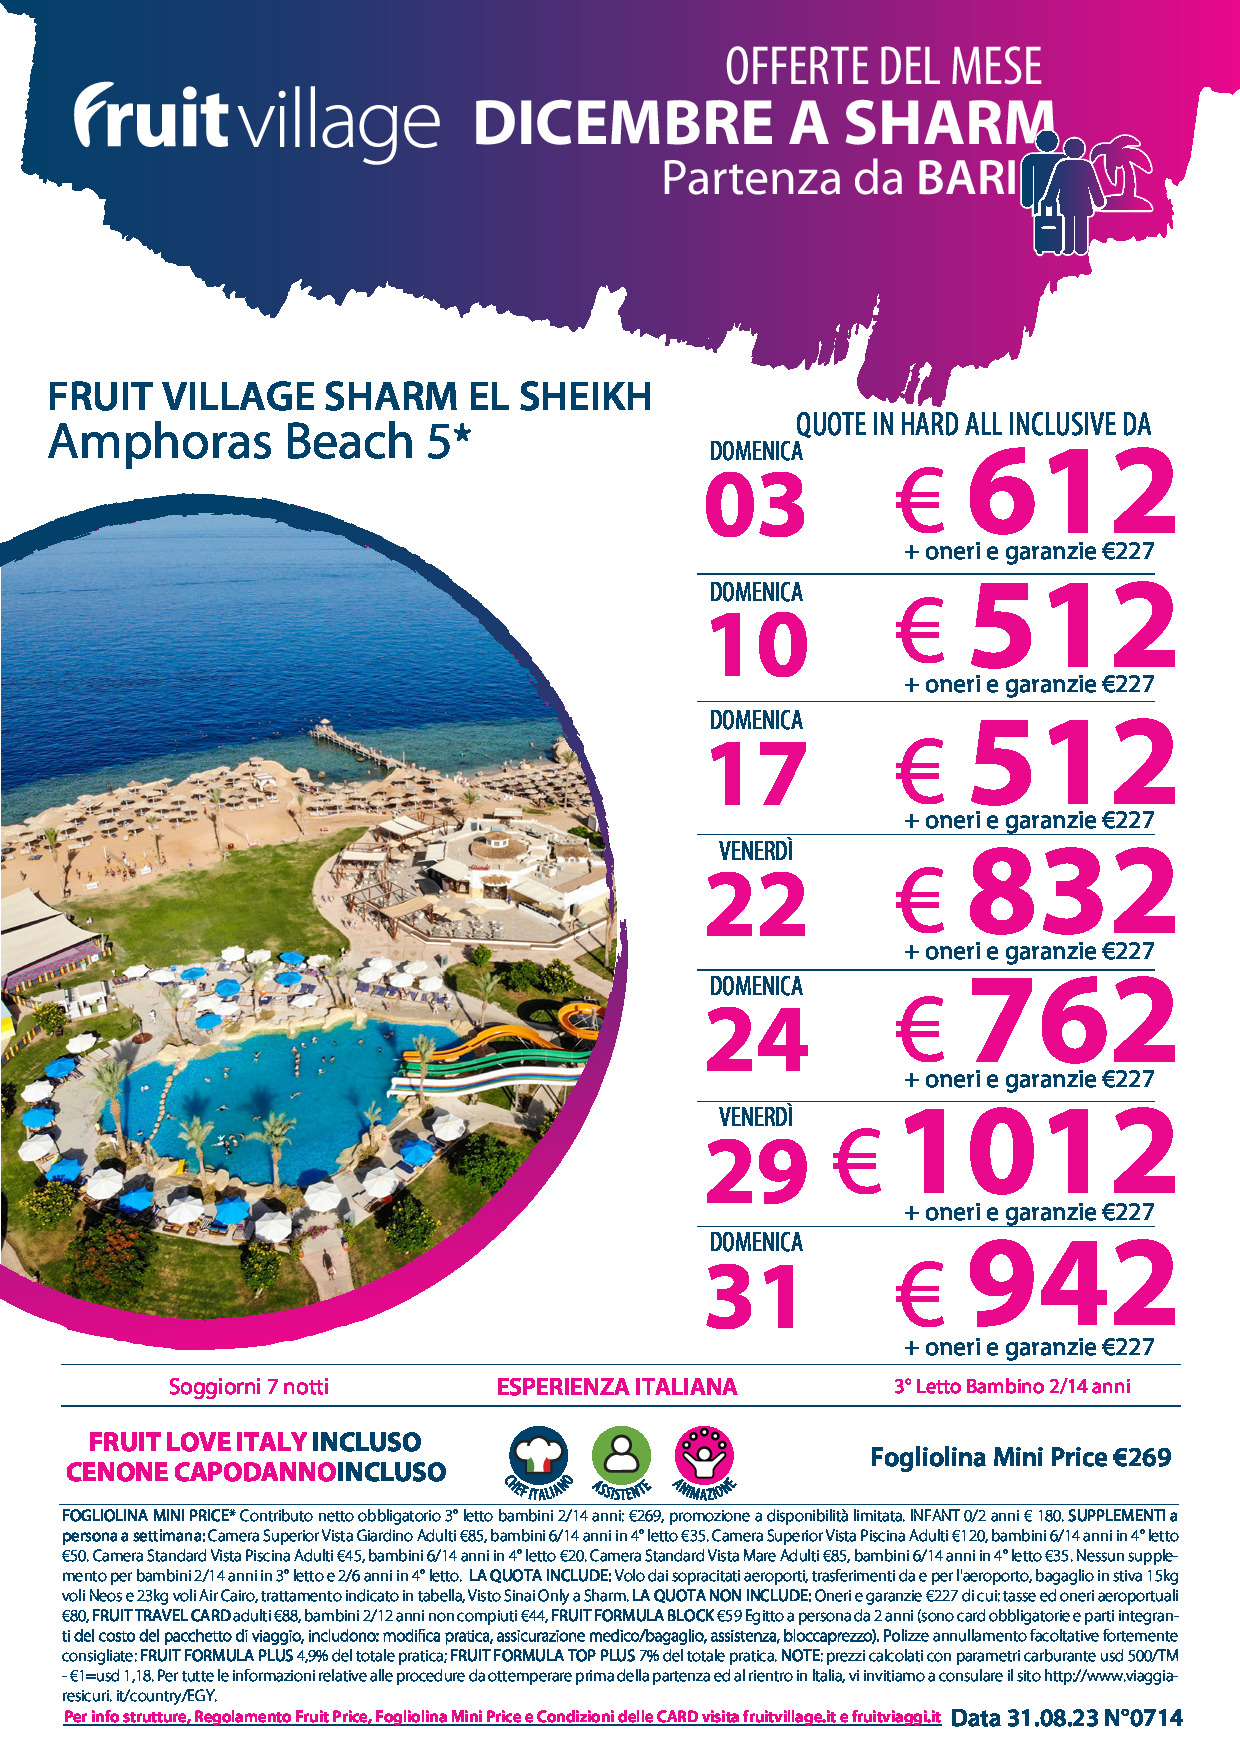 FRUIT VILLAGE Sharm El Sheikh Amphoras Beach - da Bari a Dicembre